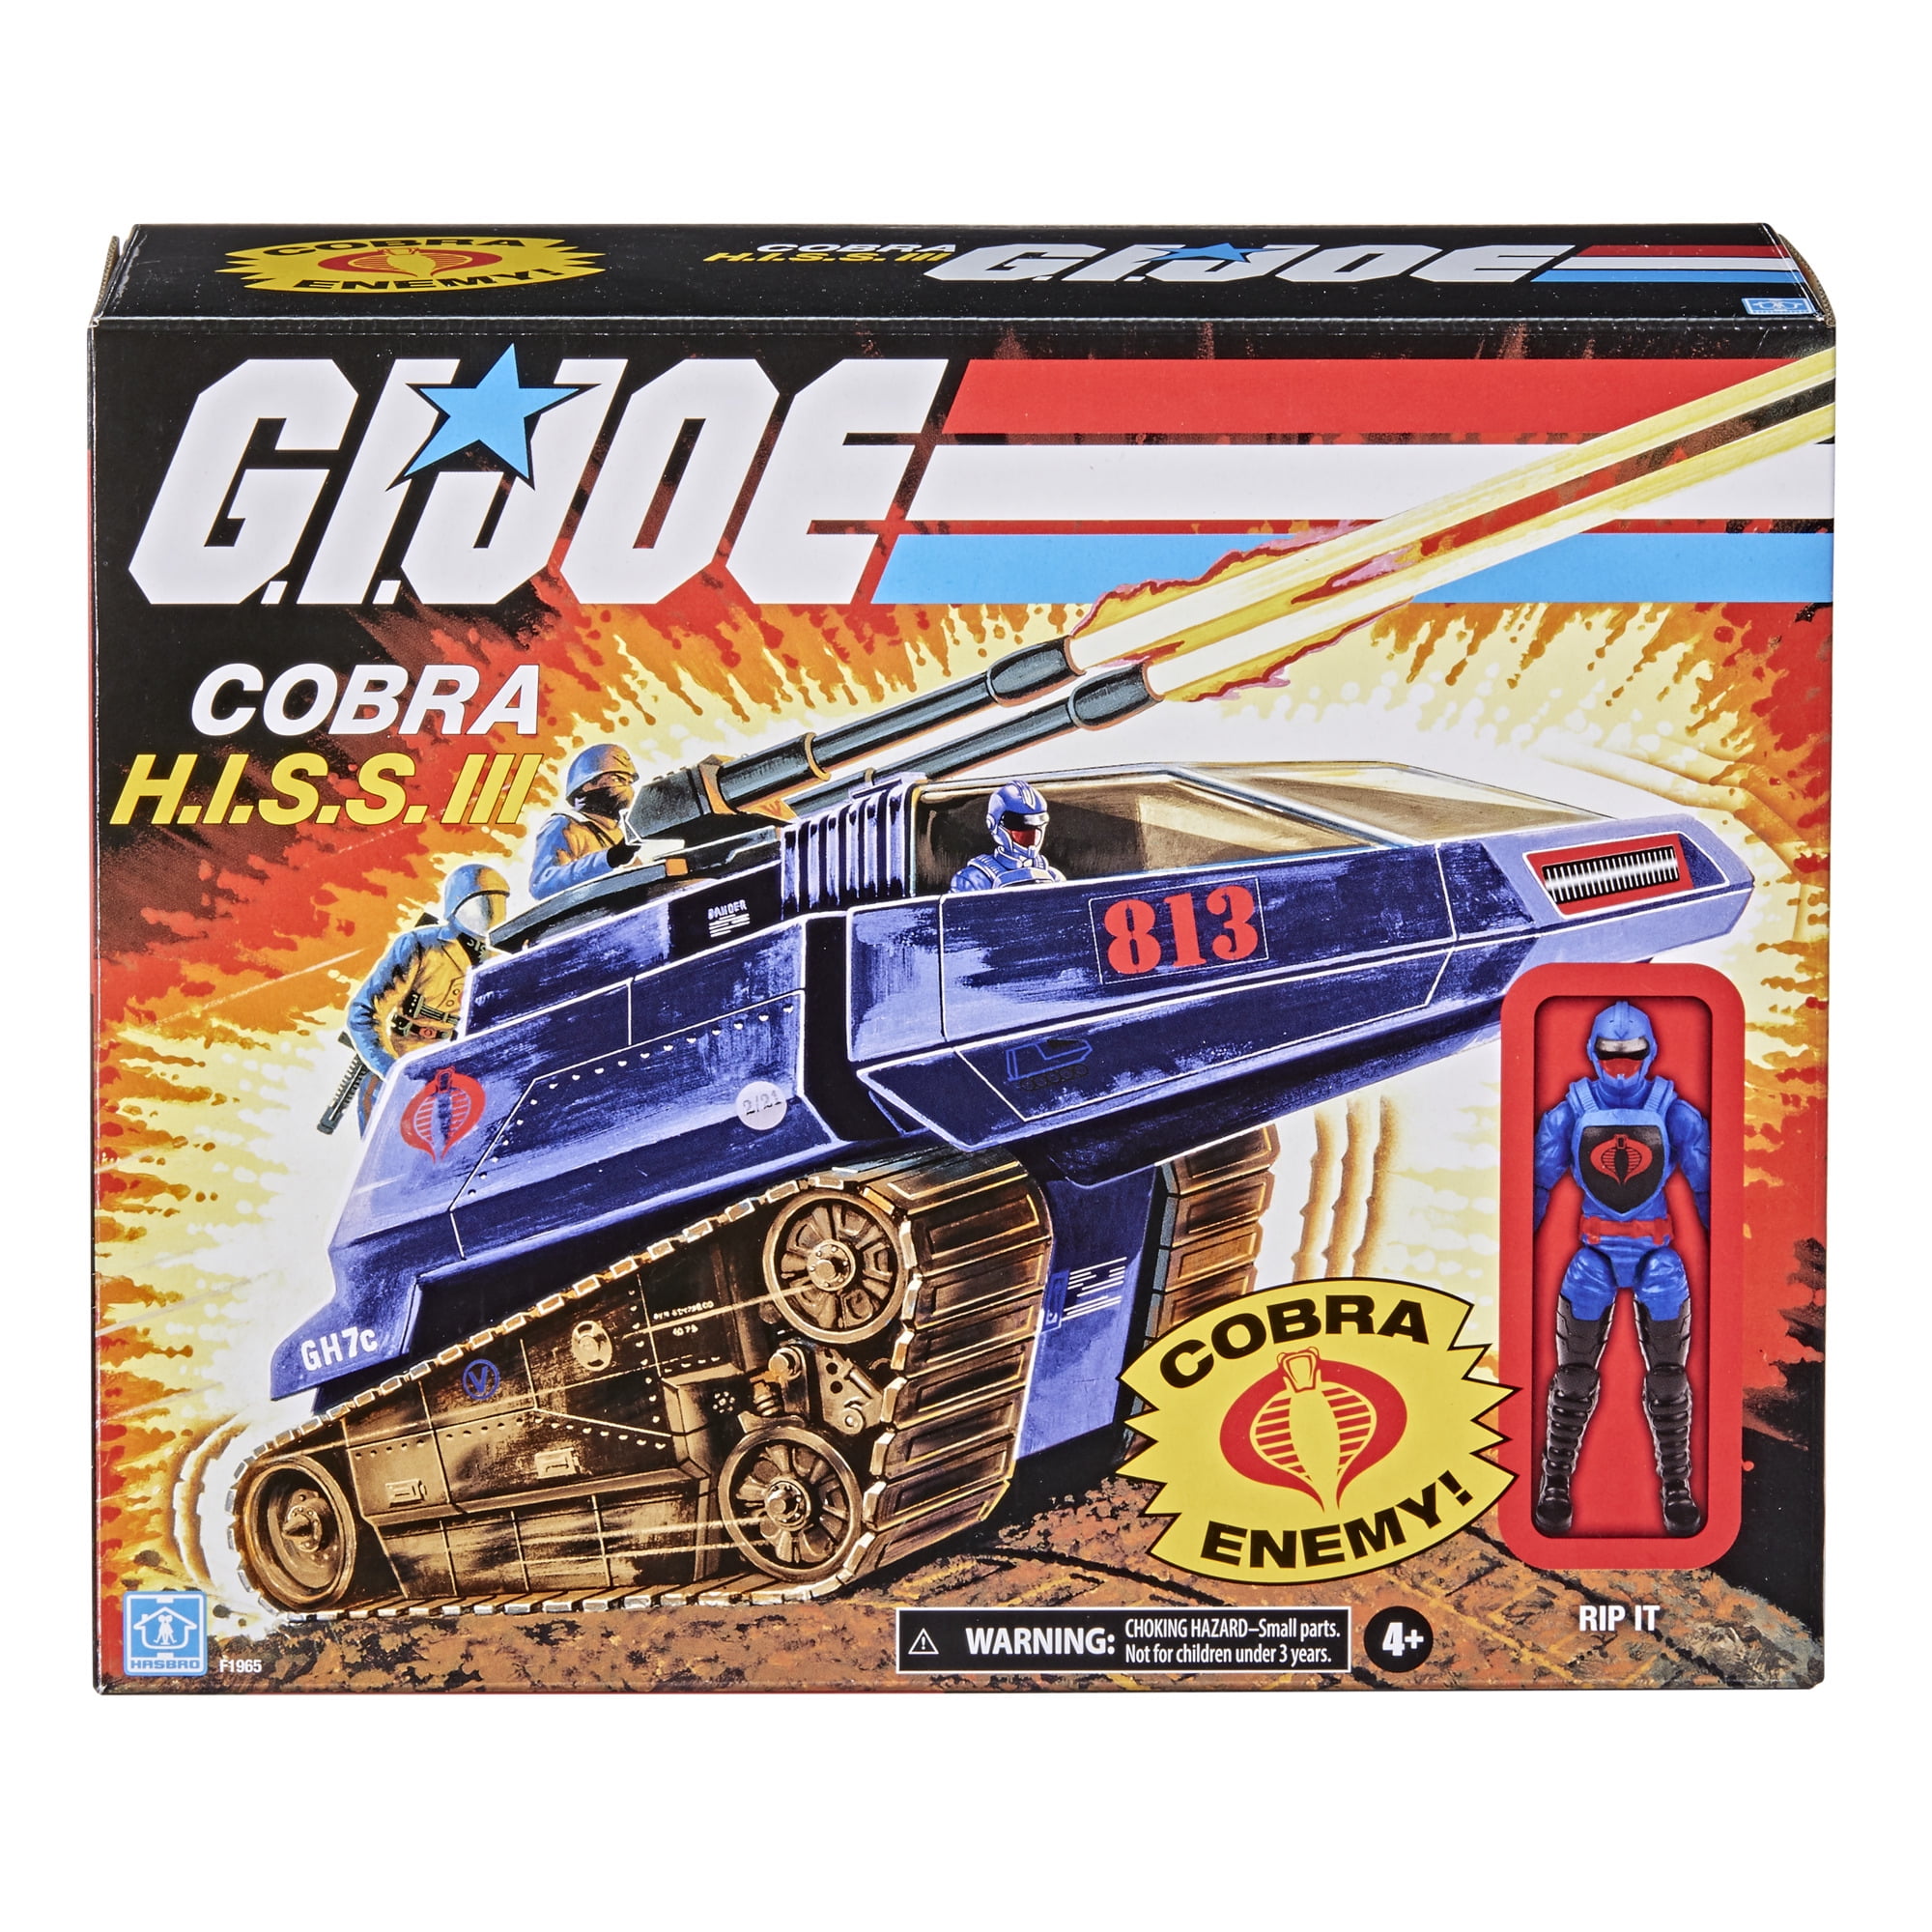 G.I Driver Vehicle Walmart Exclusive New Joe Retro Collection Cobra H.I.S.S 